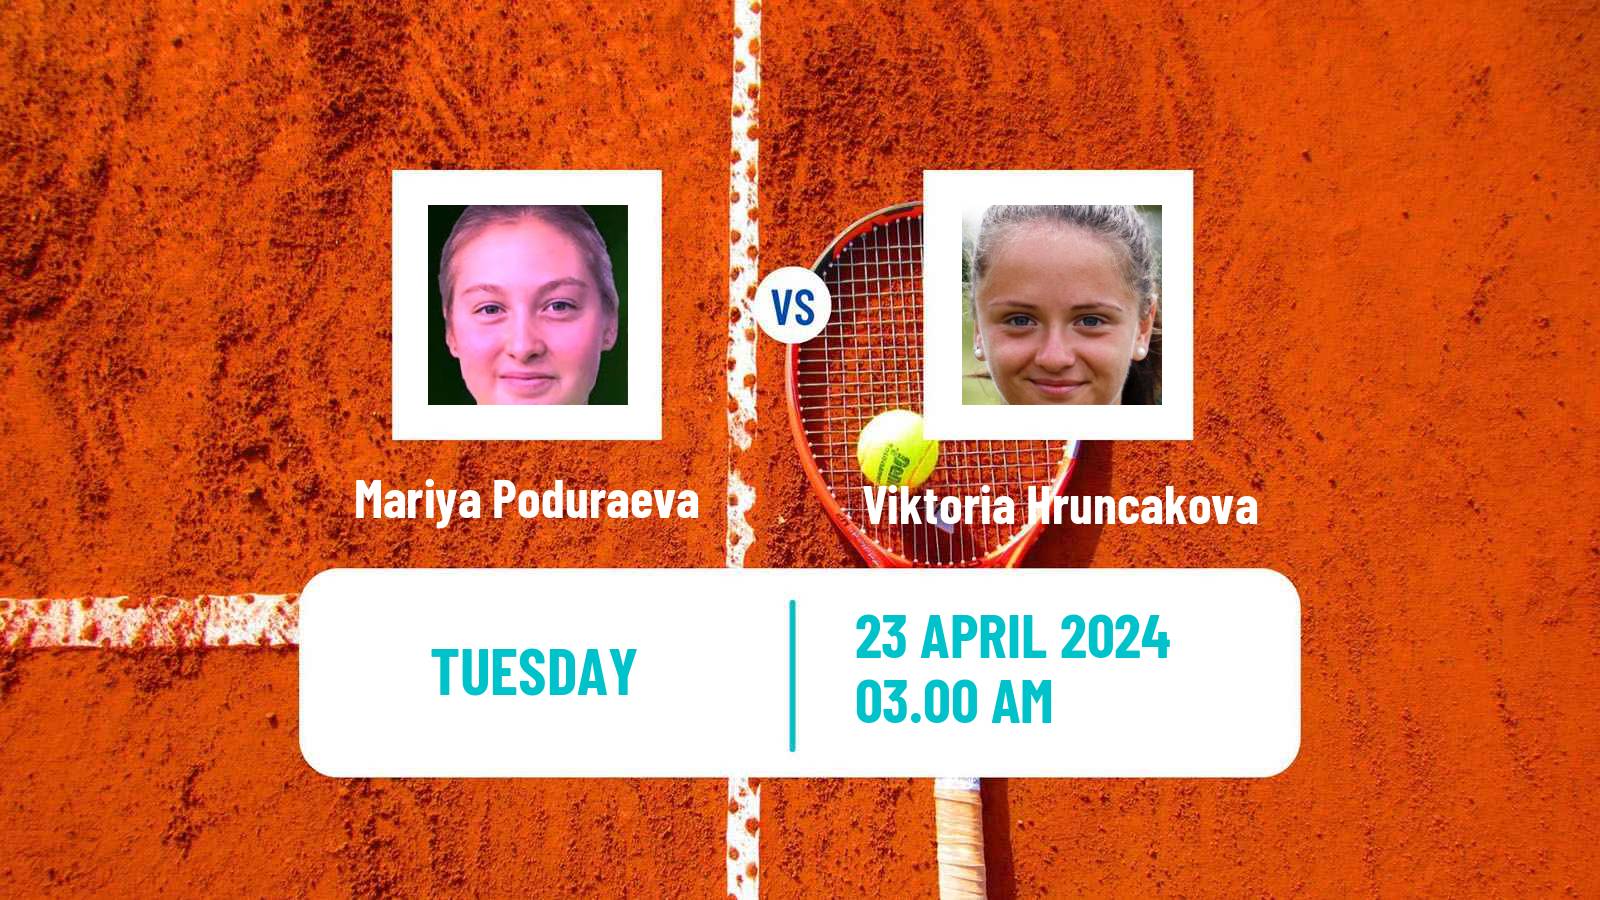 Tennis ITF W50 Lopota Women Mariya Poduraeva - Viktoria Hruncakova